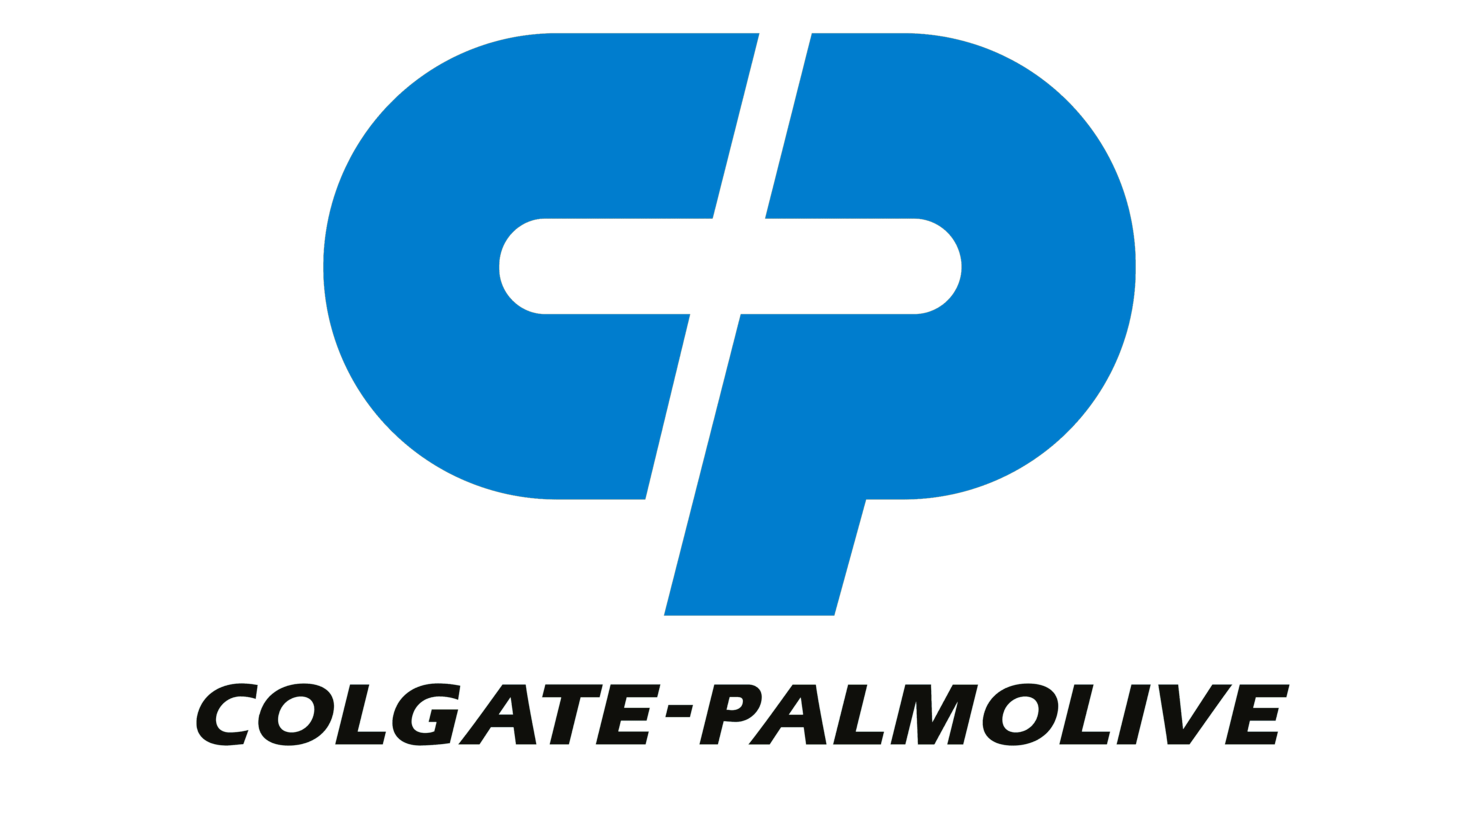 Colgate palmolive logo